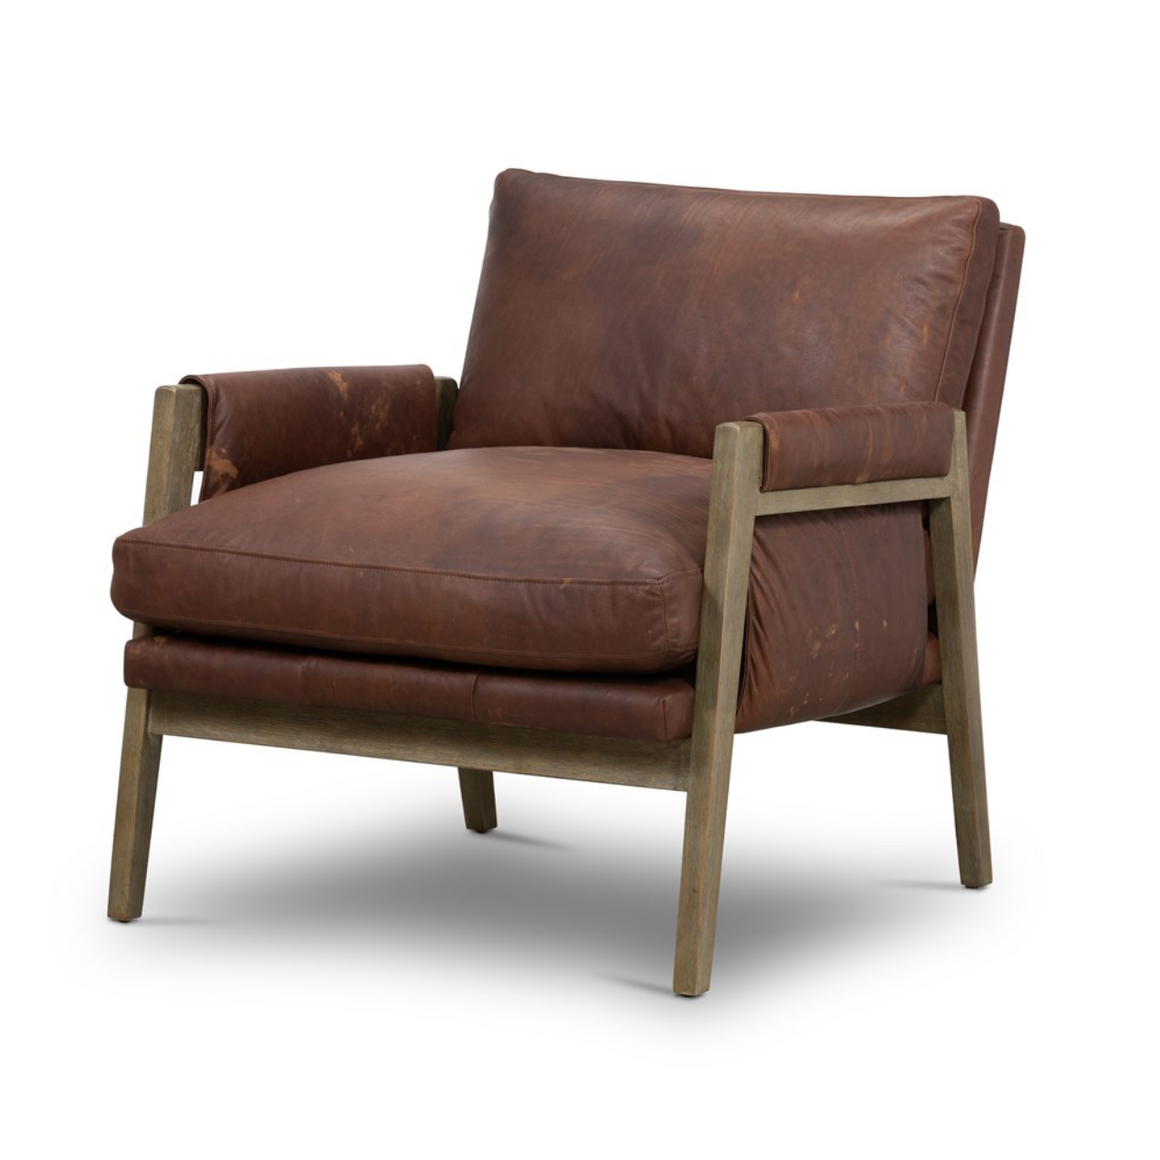 Fairbanks 30" Top Grain Leather Occasional Chair - Heirloom Sienna